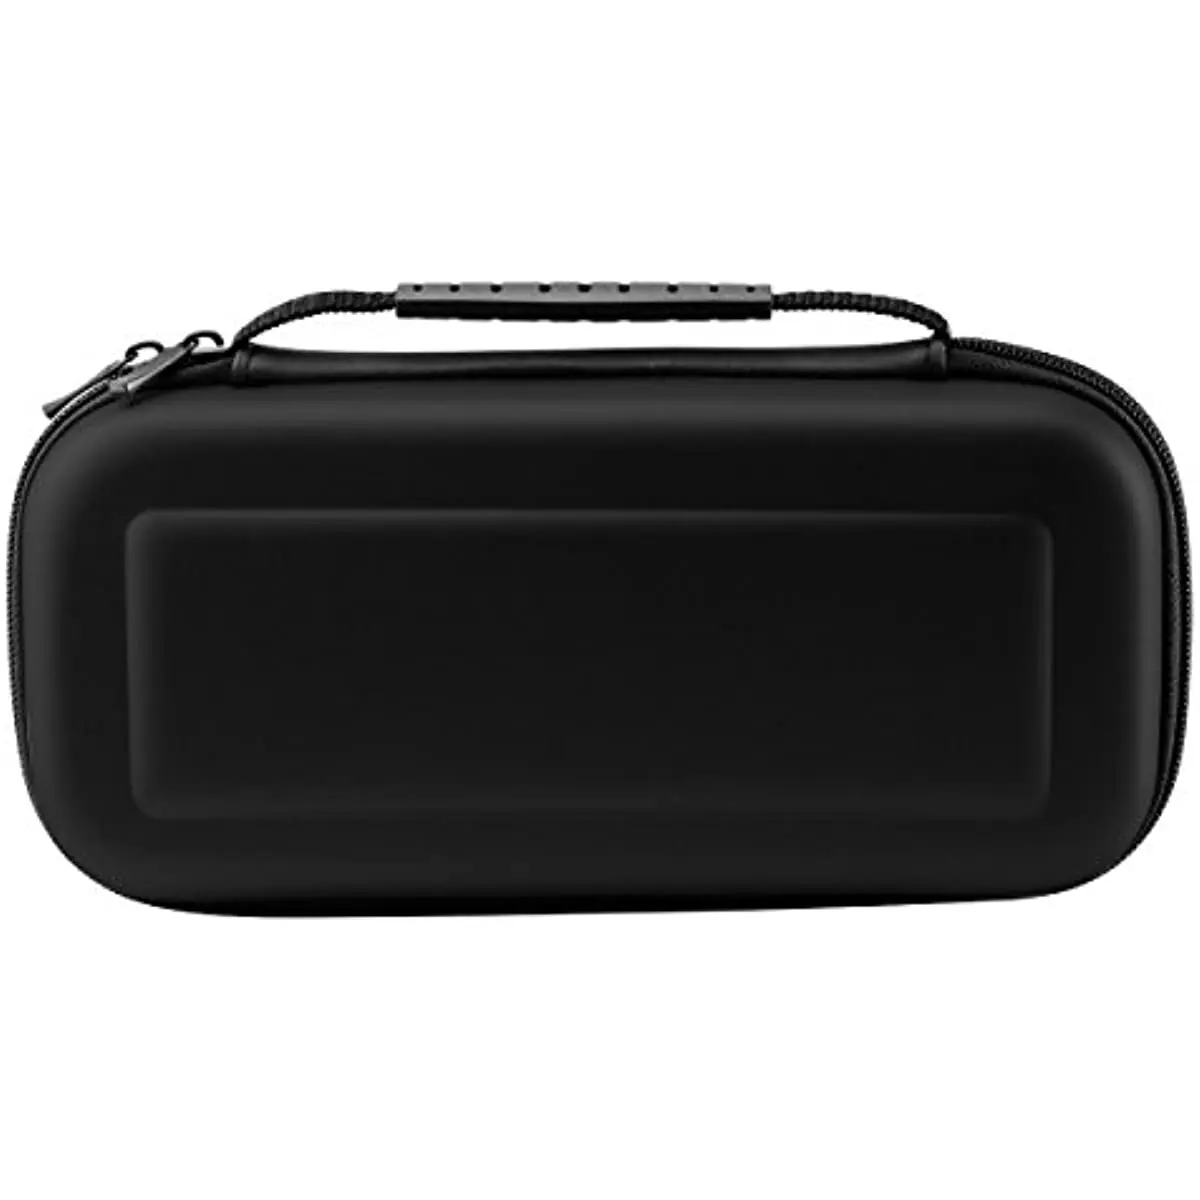 Enterest Storage Hard Carrying Bag Travel Case for Nintend Switch EVA Material Game Traveler Deluxe Travel Case (Black)